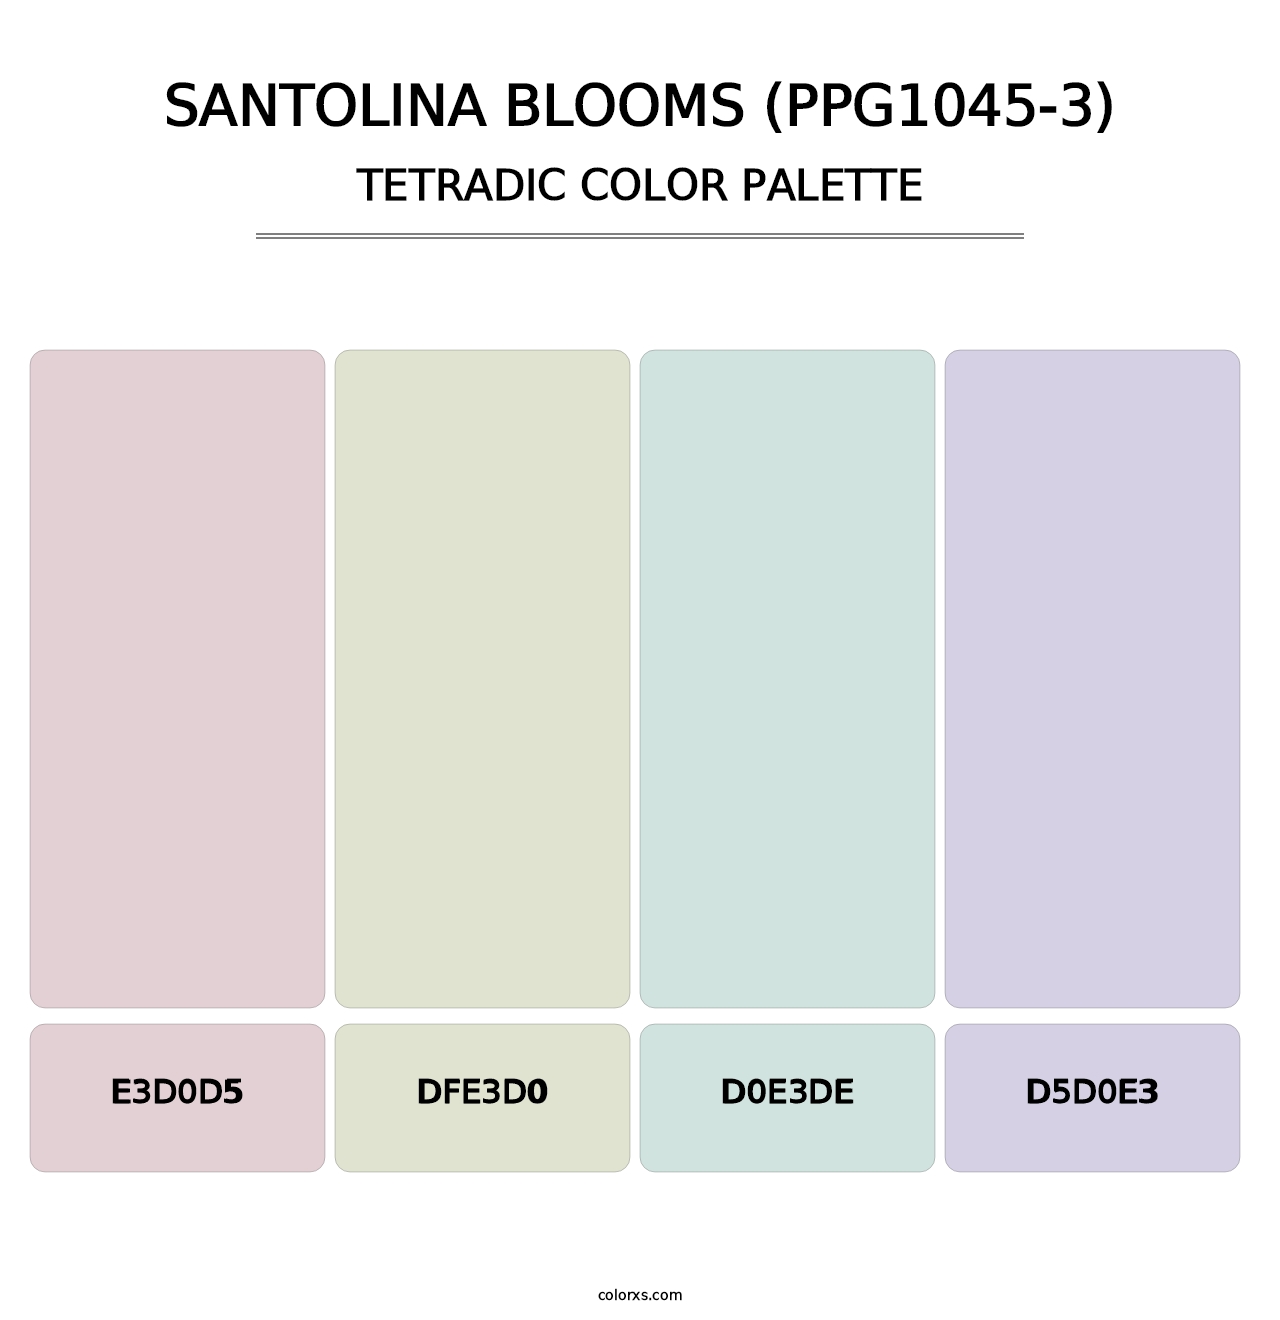 Santolina Blooms (PPG1045-3) - Tetradic Color Palette